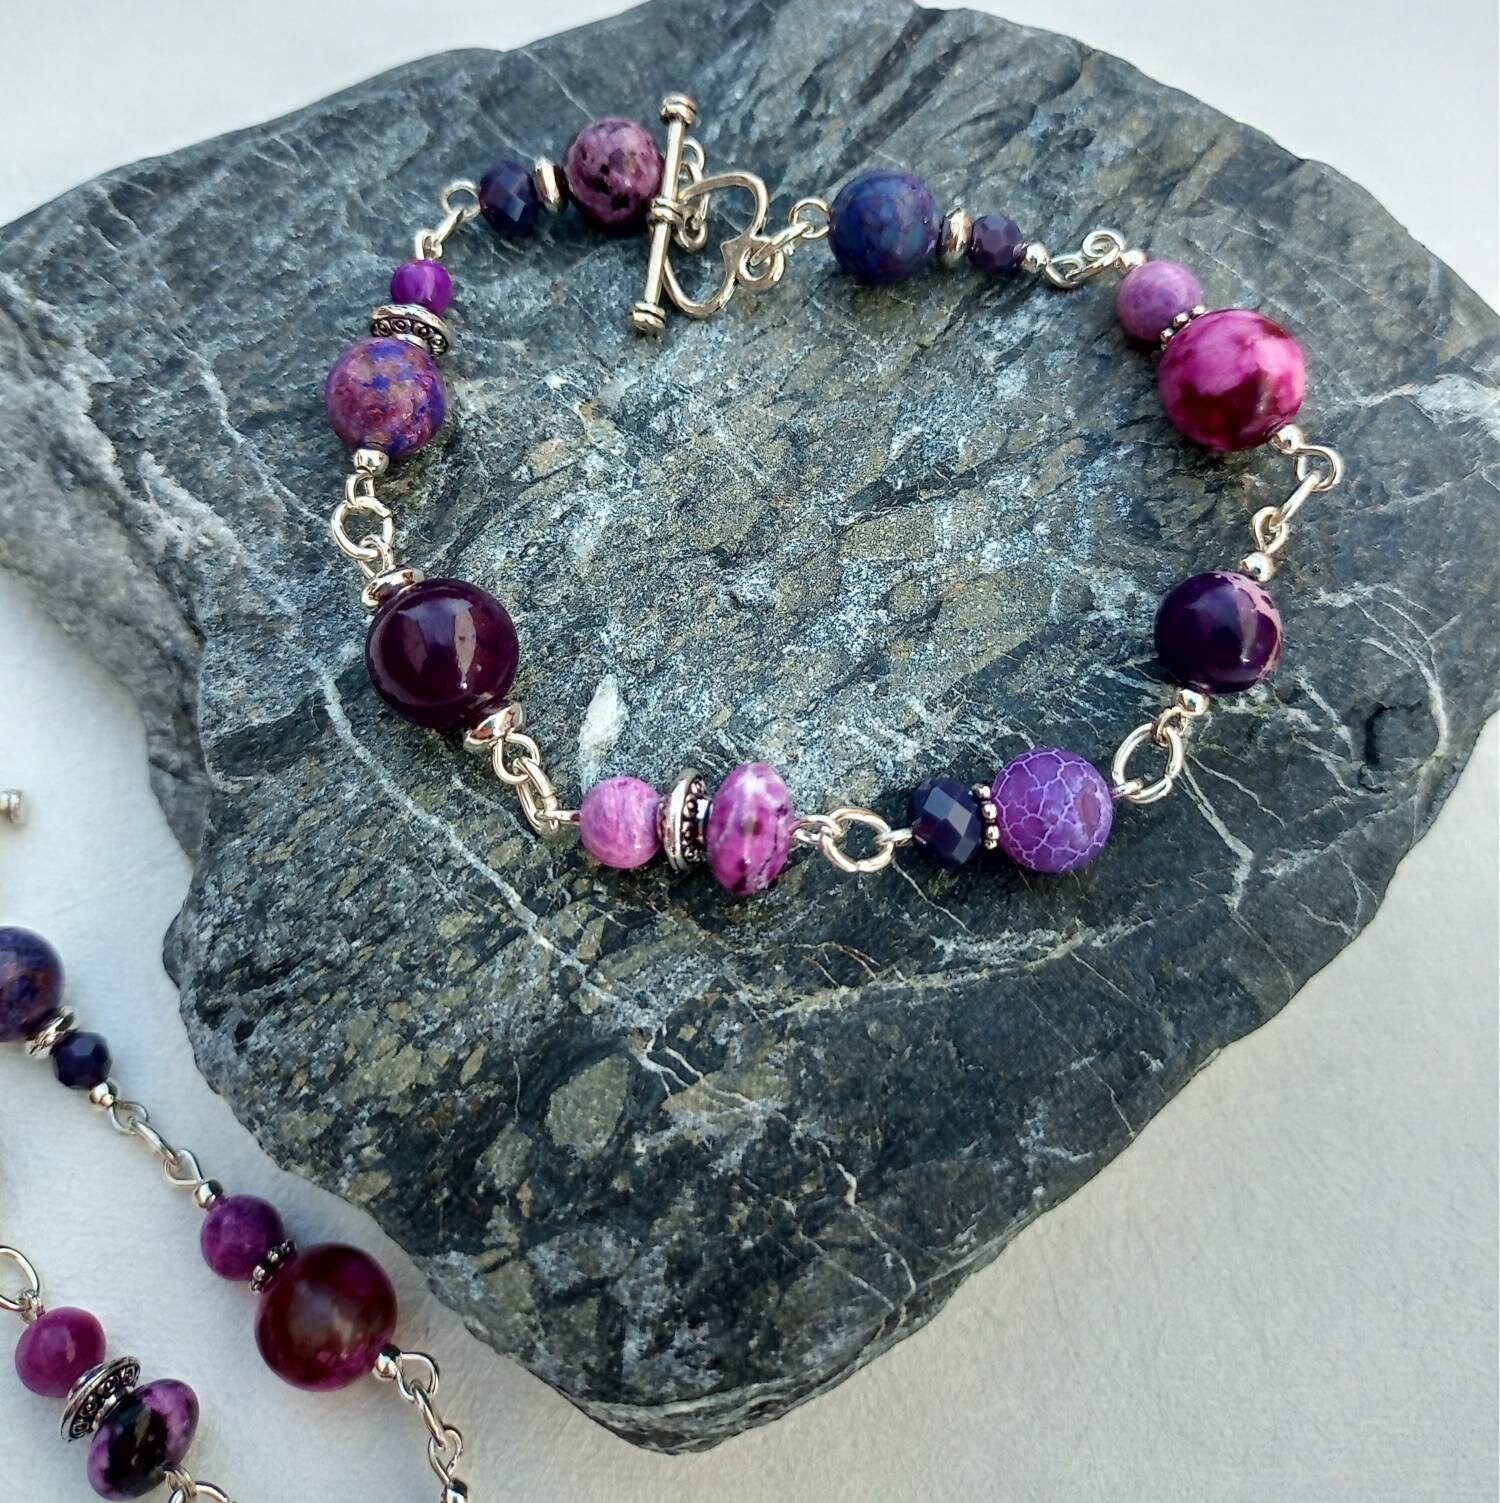 Gorgeous Purple Composite Stone Turquoise Rondelles Beads 10 mm / 2 x  Unique beads